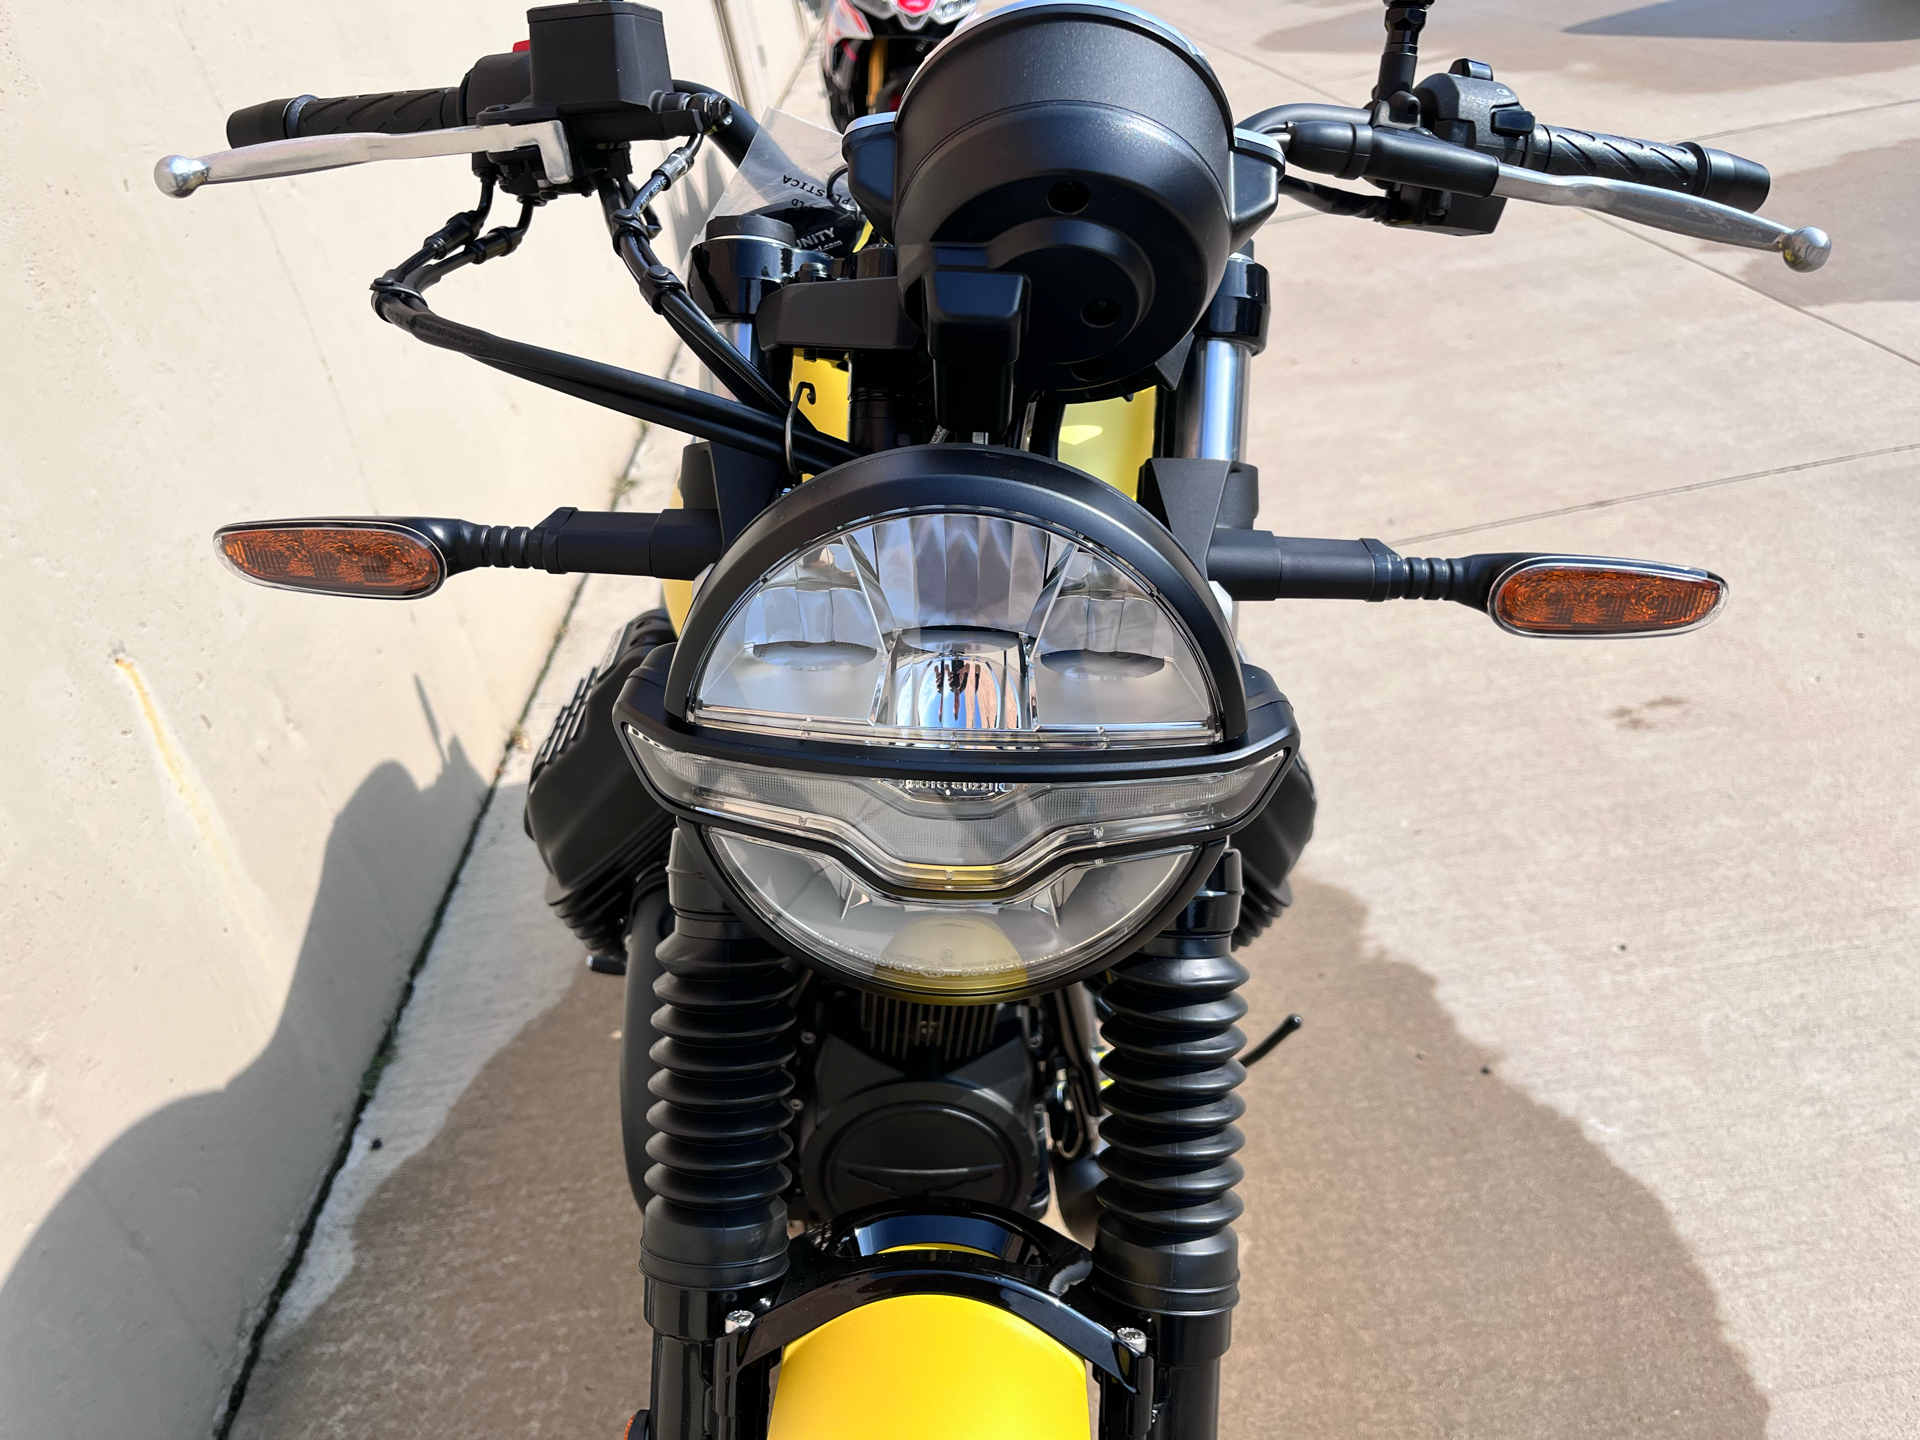 2023 Moto Guzzi V7 Stone in Roselle, Illinois - Photo 9